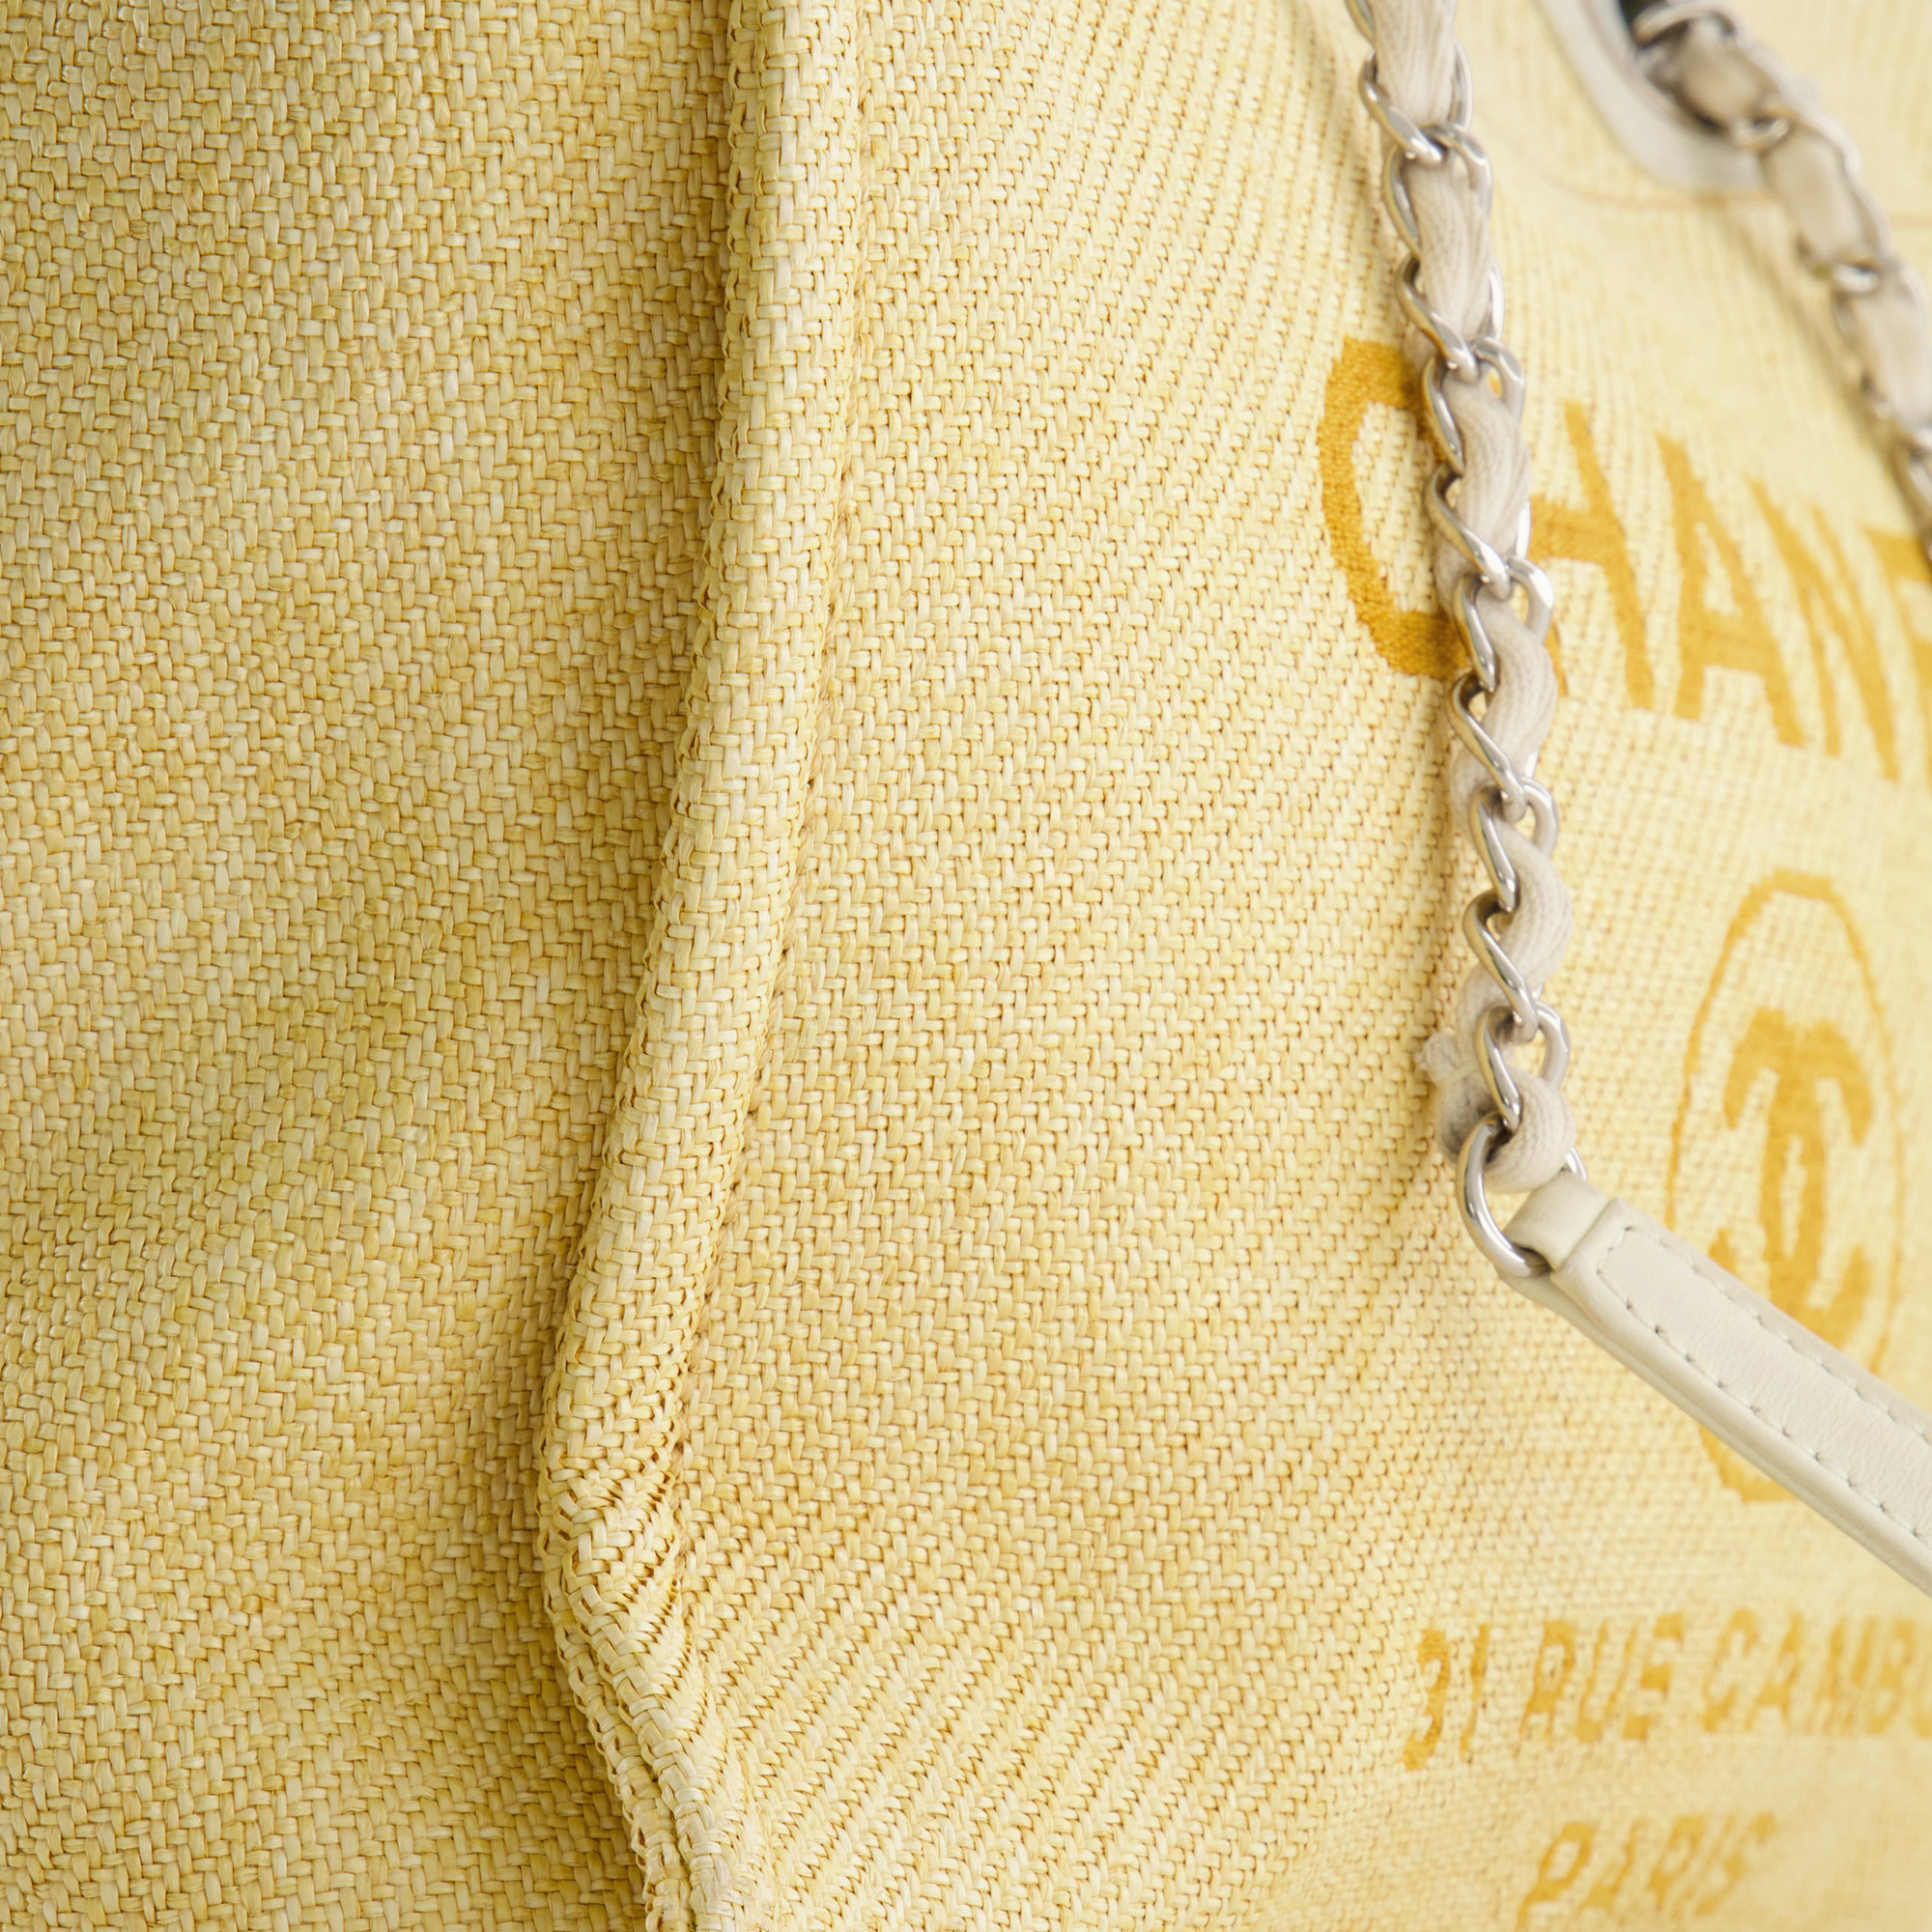 Chanel Yellow Raffia Small Deauville Tote Bag With Silver Hardware